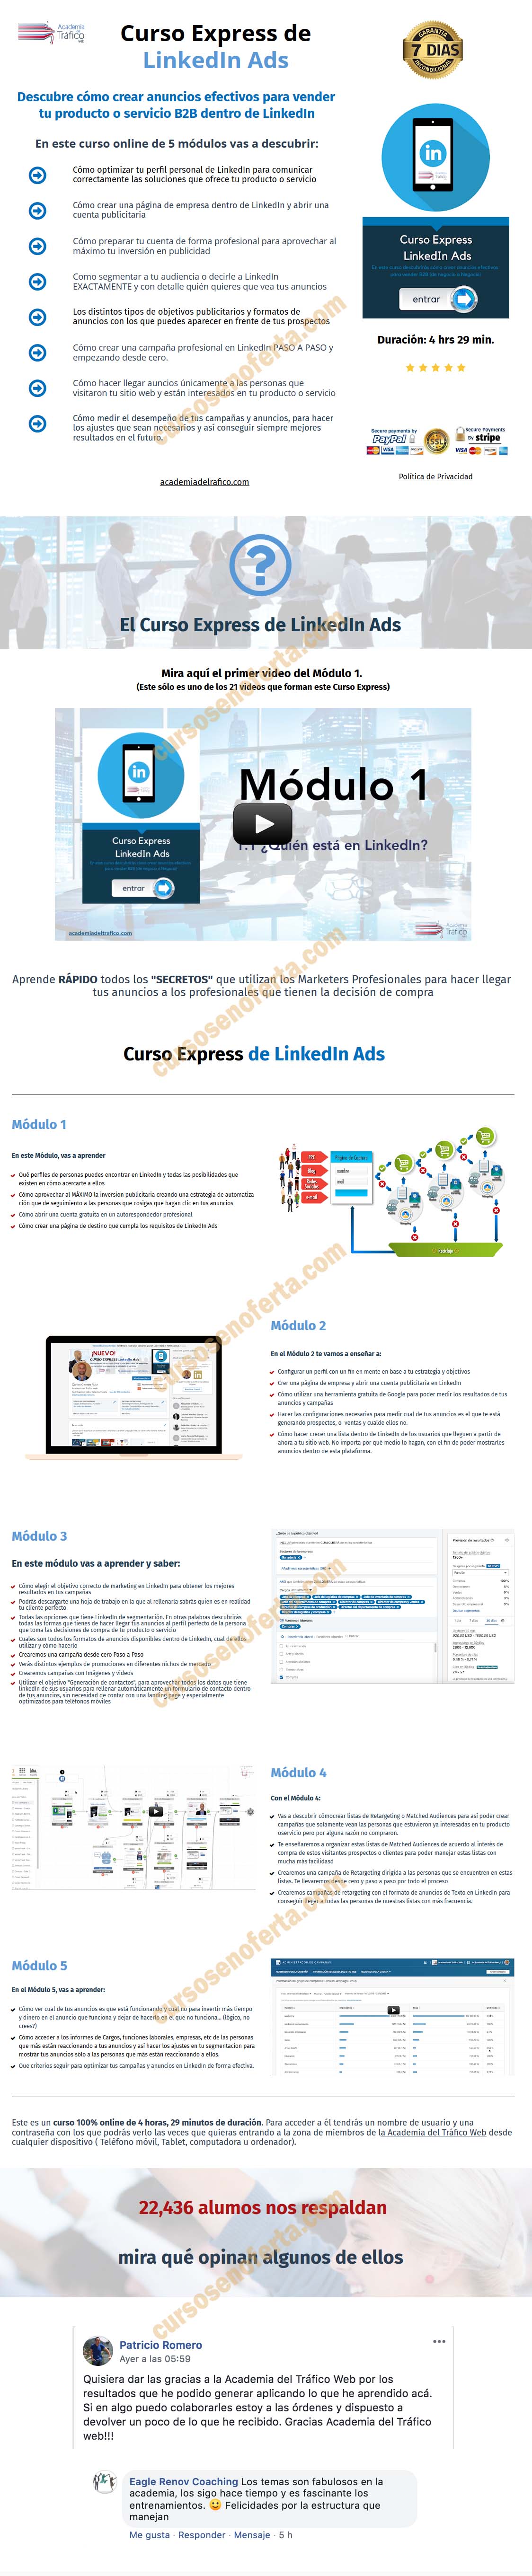 Curso Express LinkedIn Ads - Carlos Cerezo